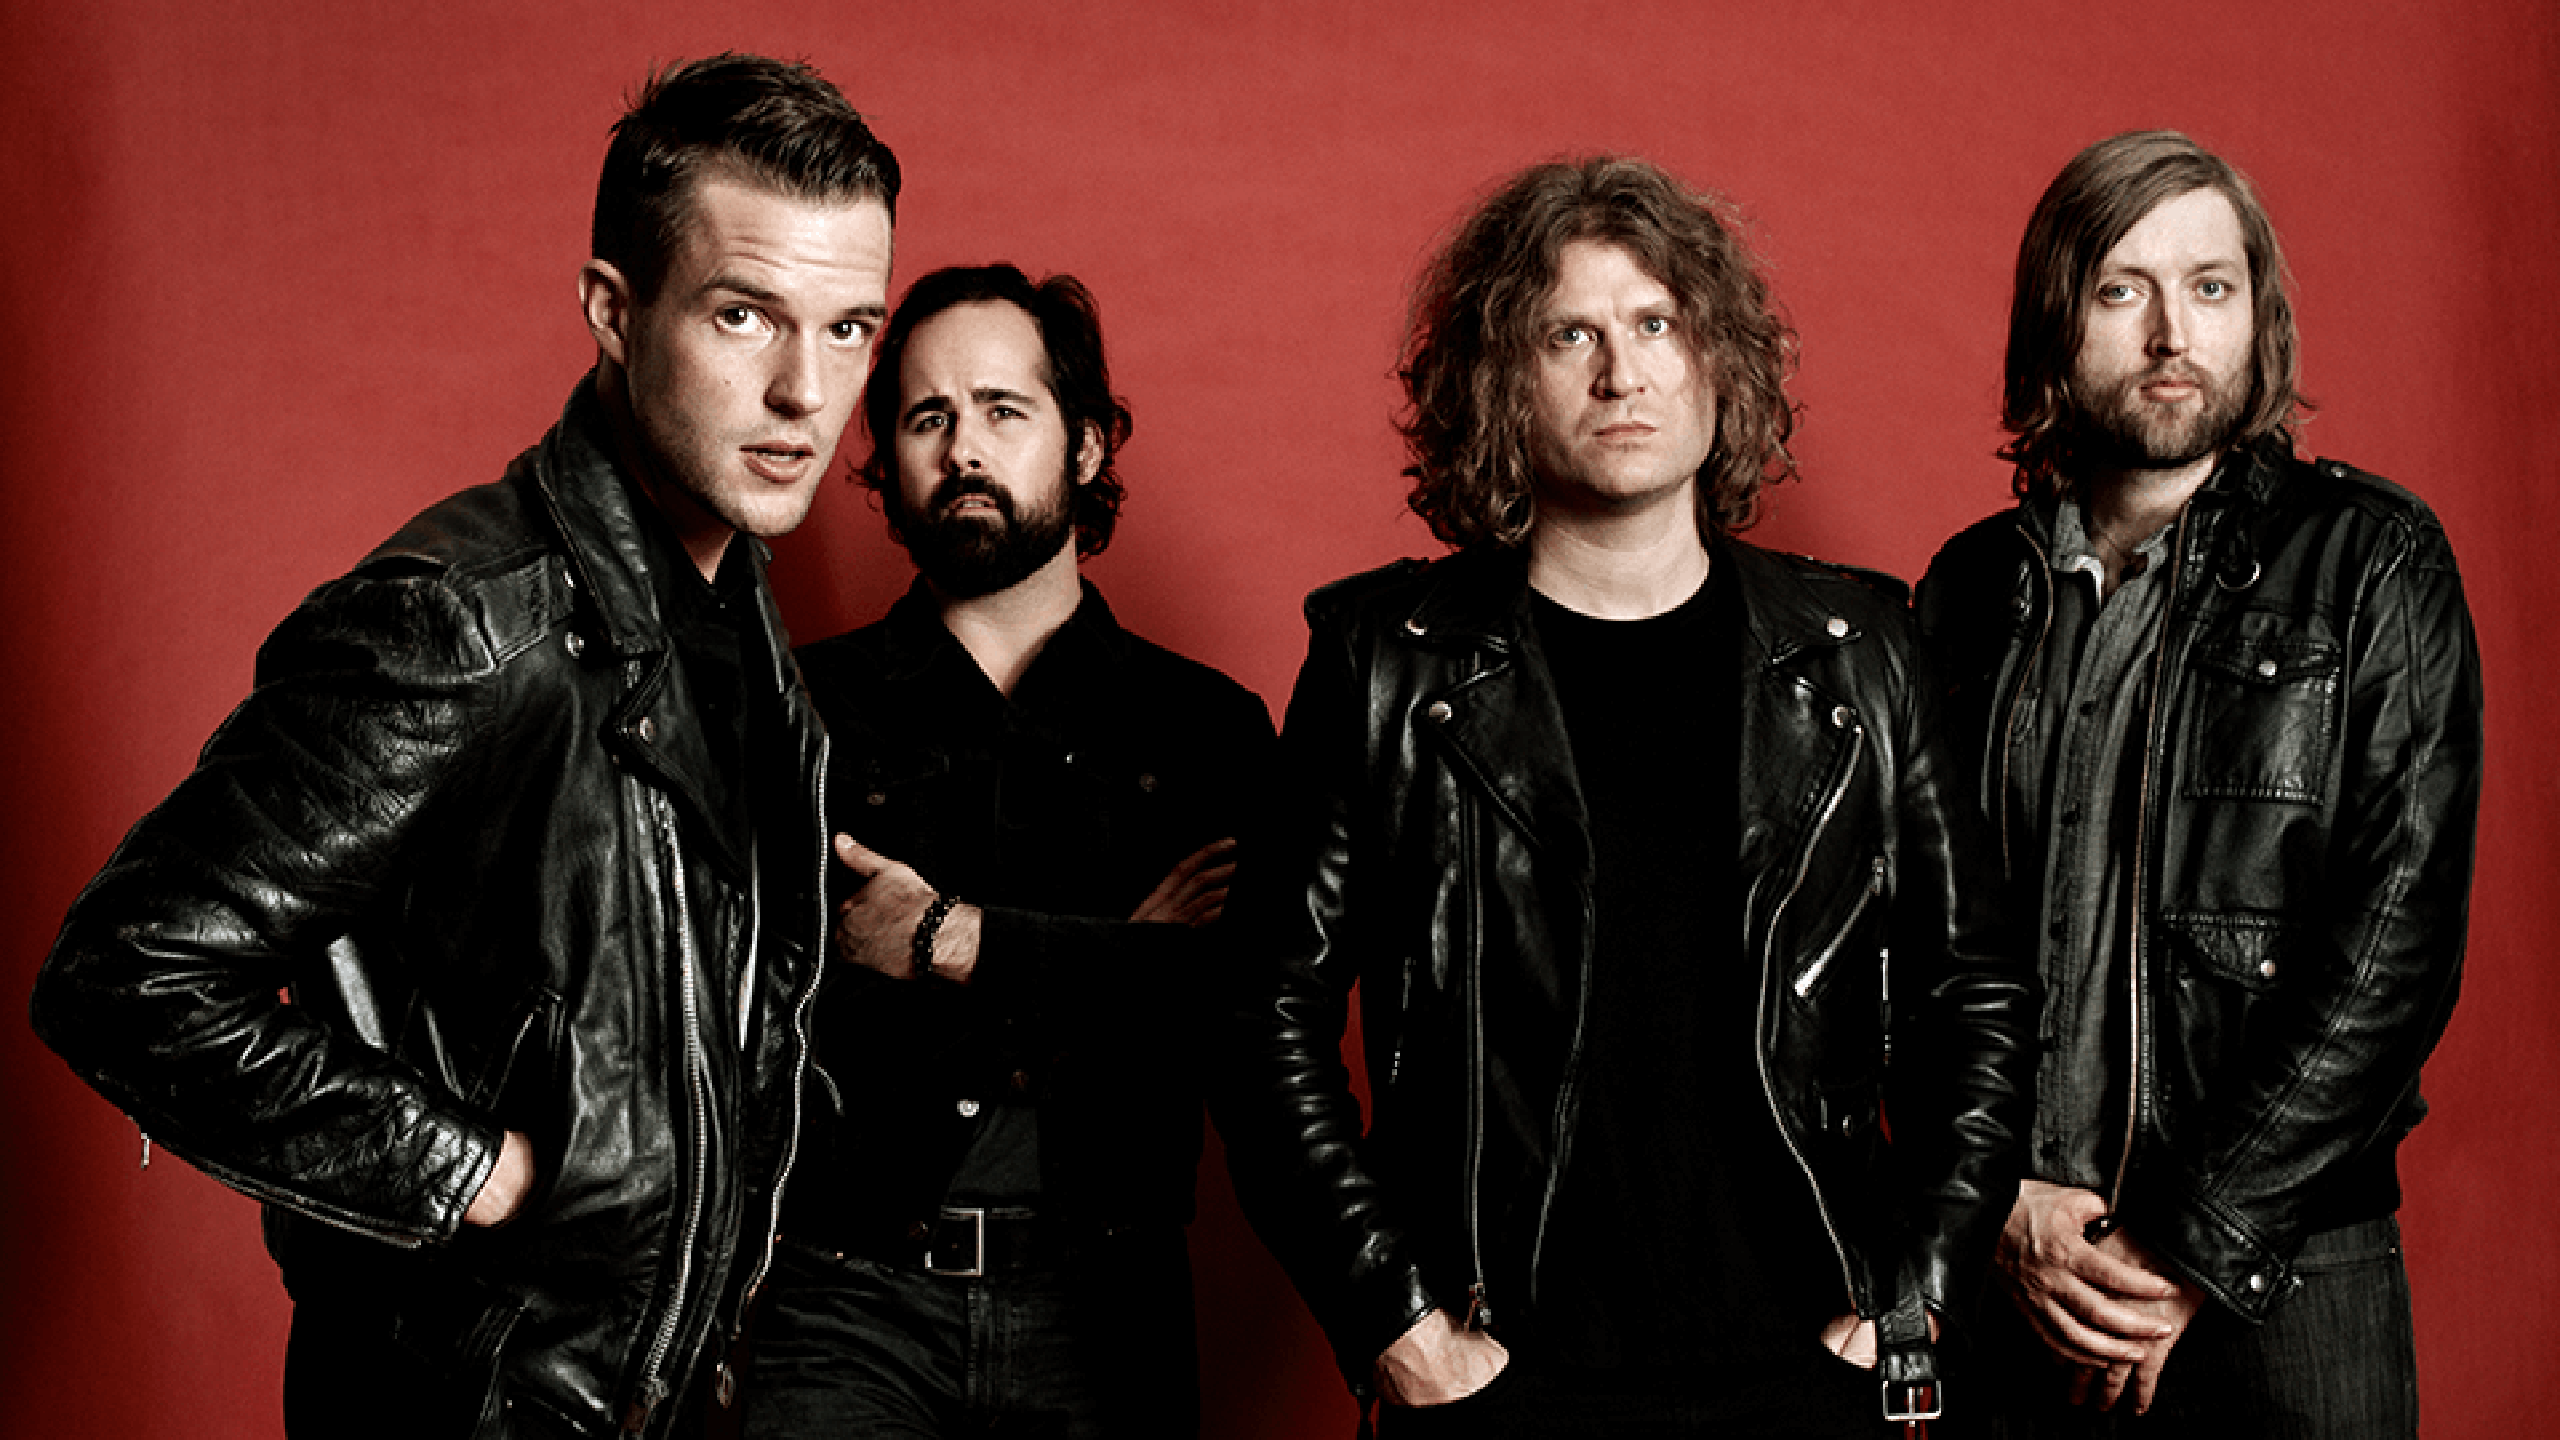 The Killers anuncian nuevo álbum y gira mundial